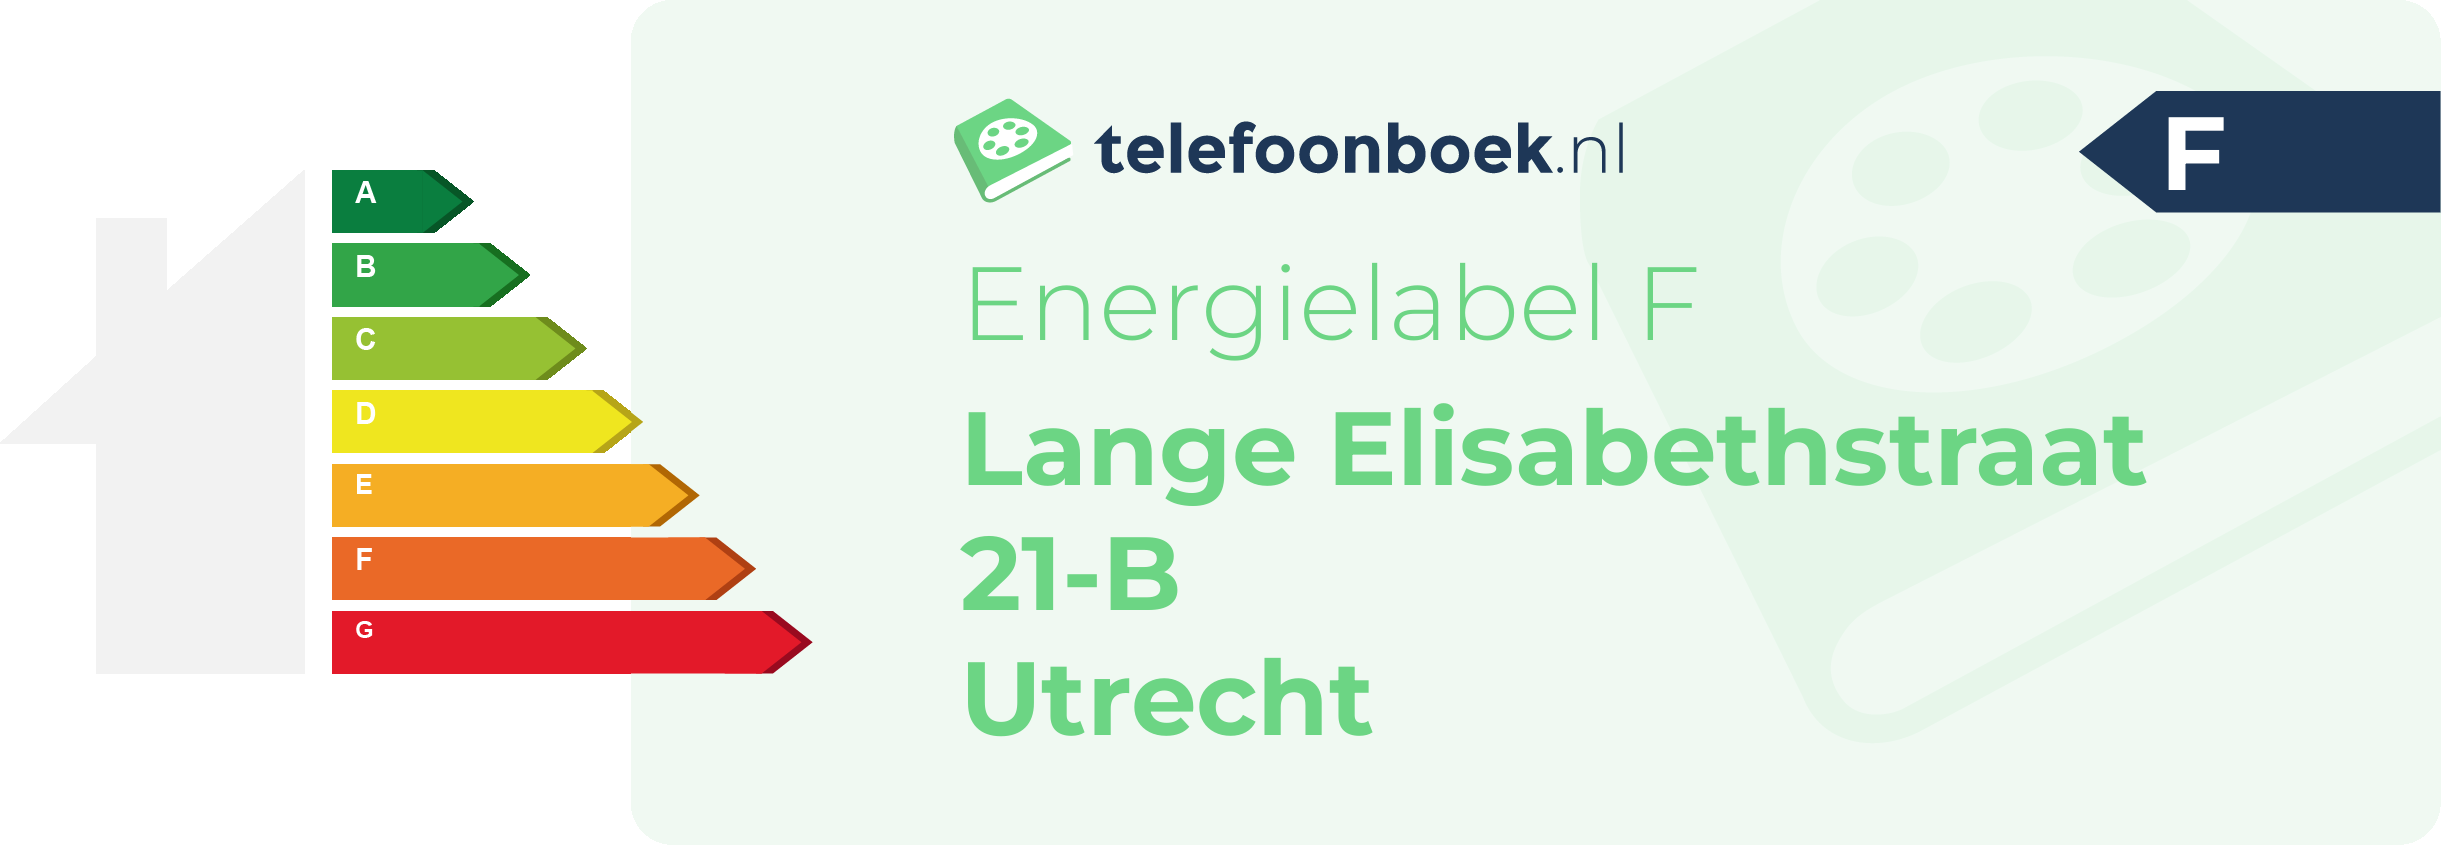 Energielabel Lange Elisabethstraat 21-B Utrecht